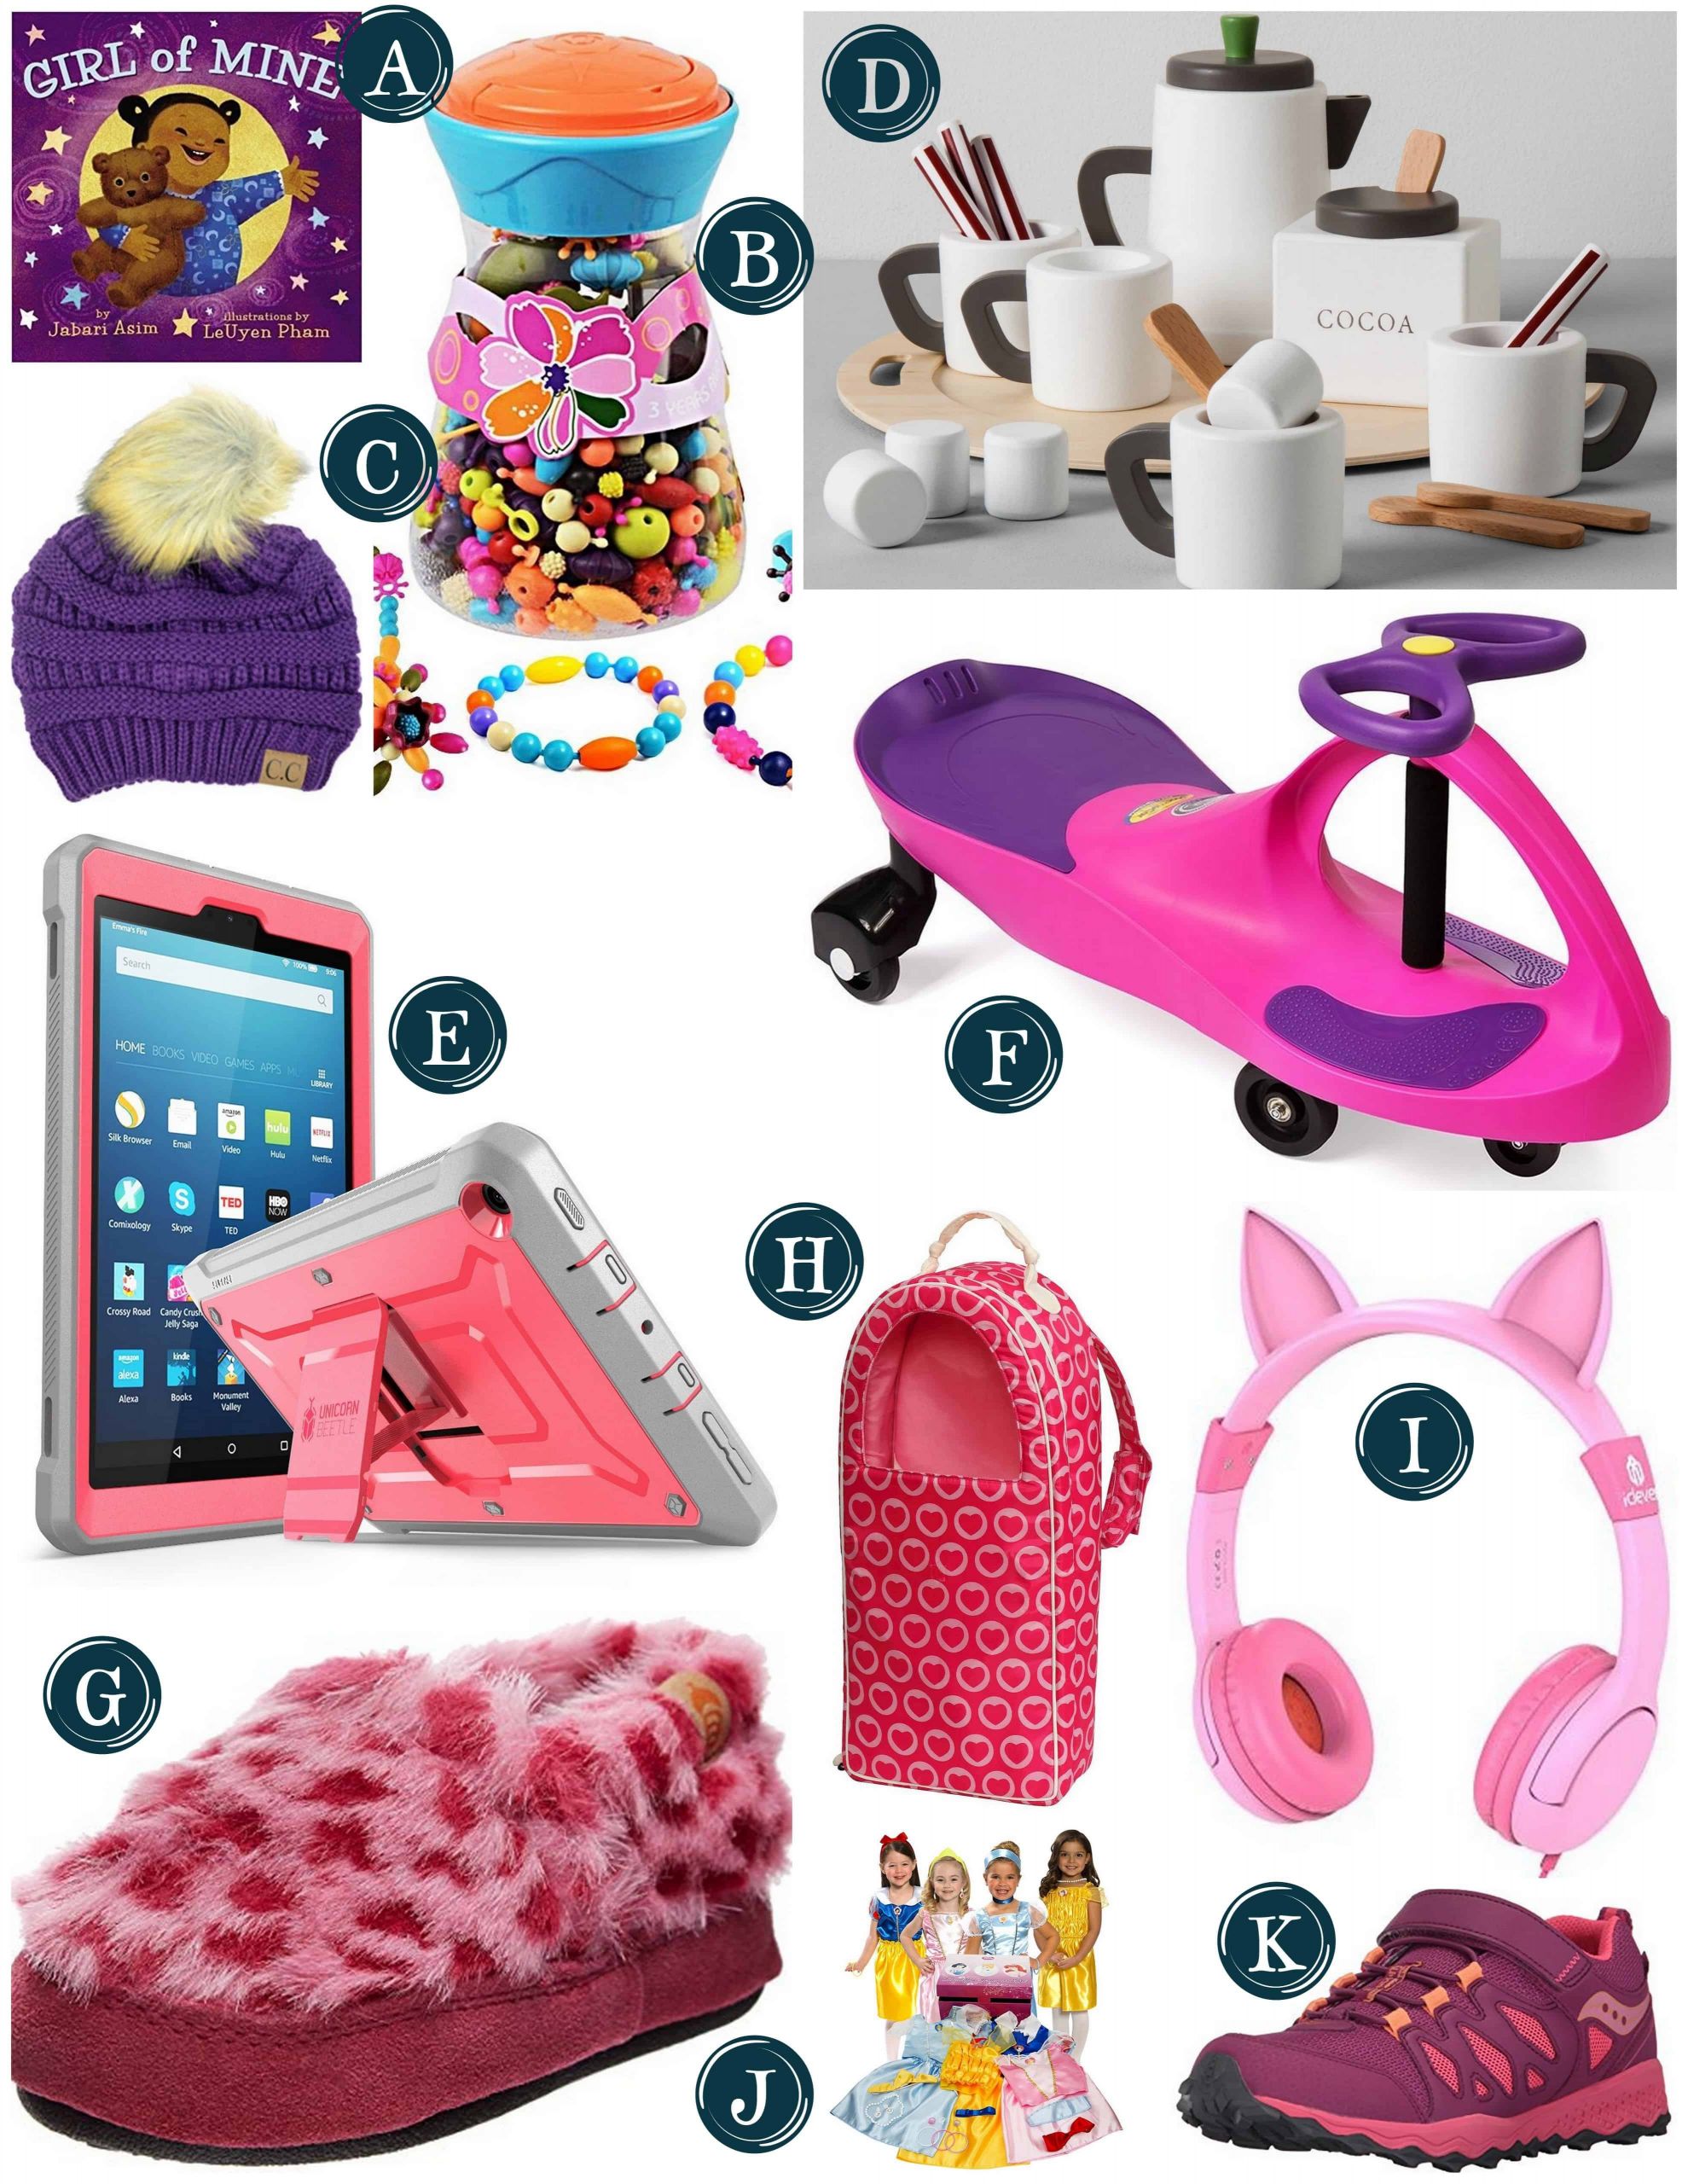 Little Christmas Gift Ideas
 Gift Guide for Little Girls Christmas Gift Ideas for Girls